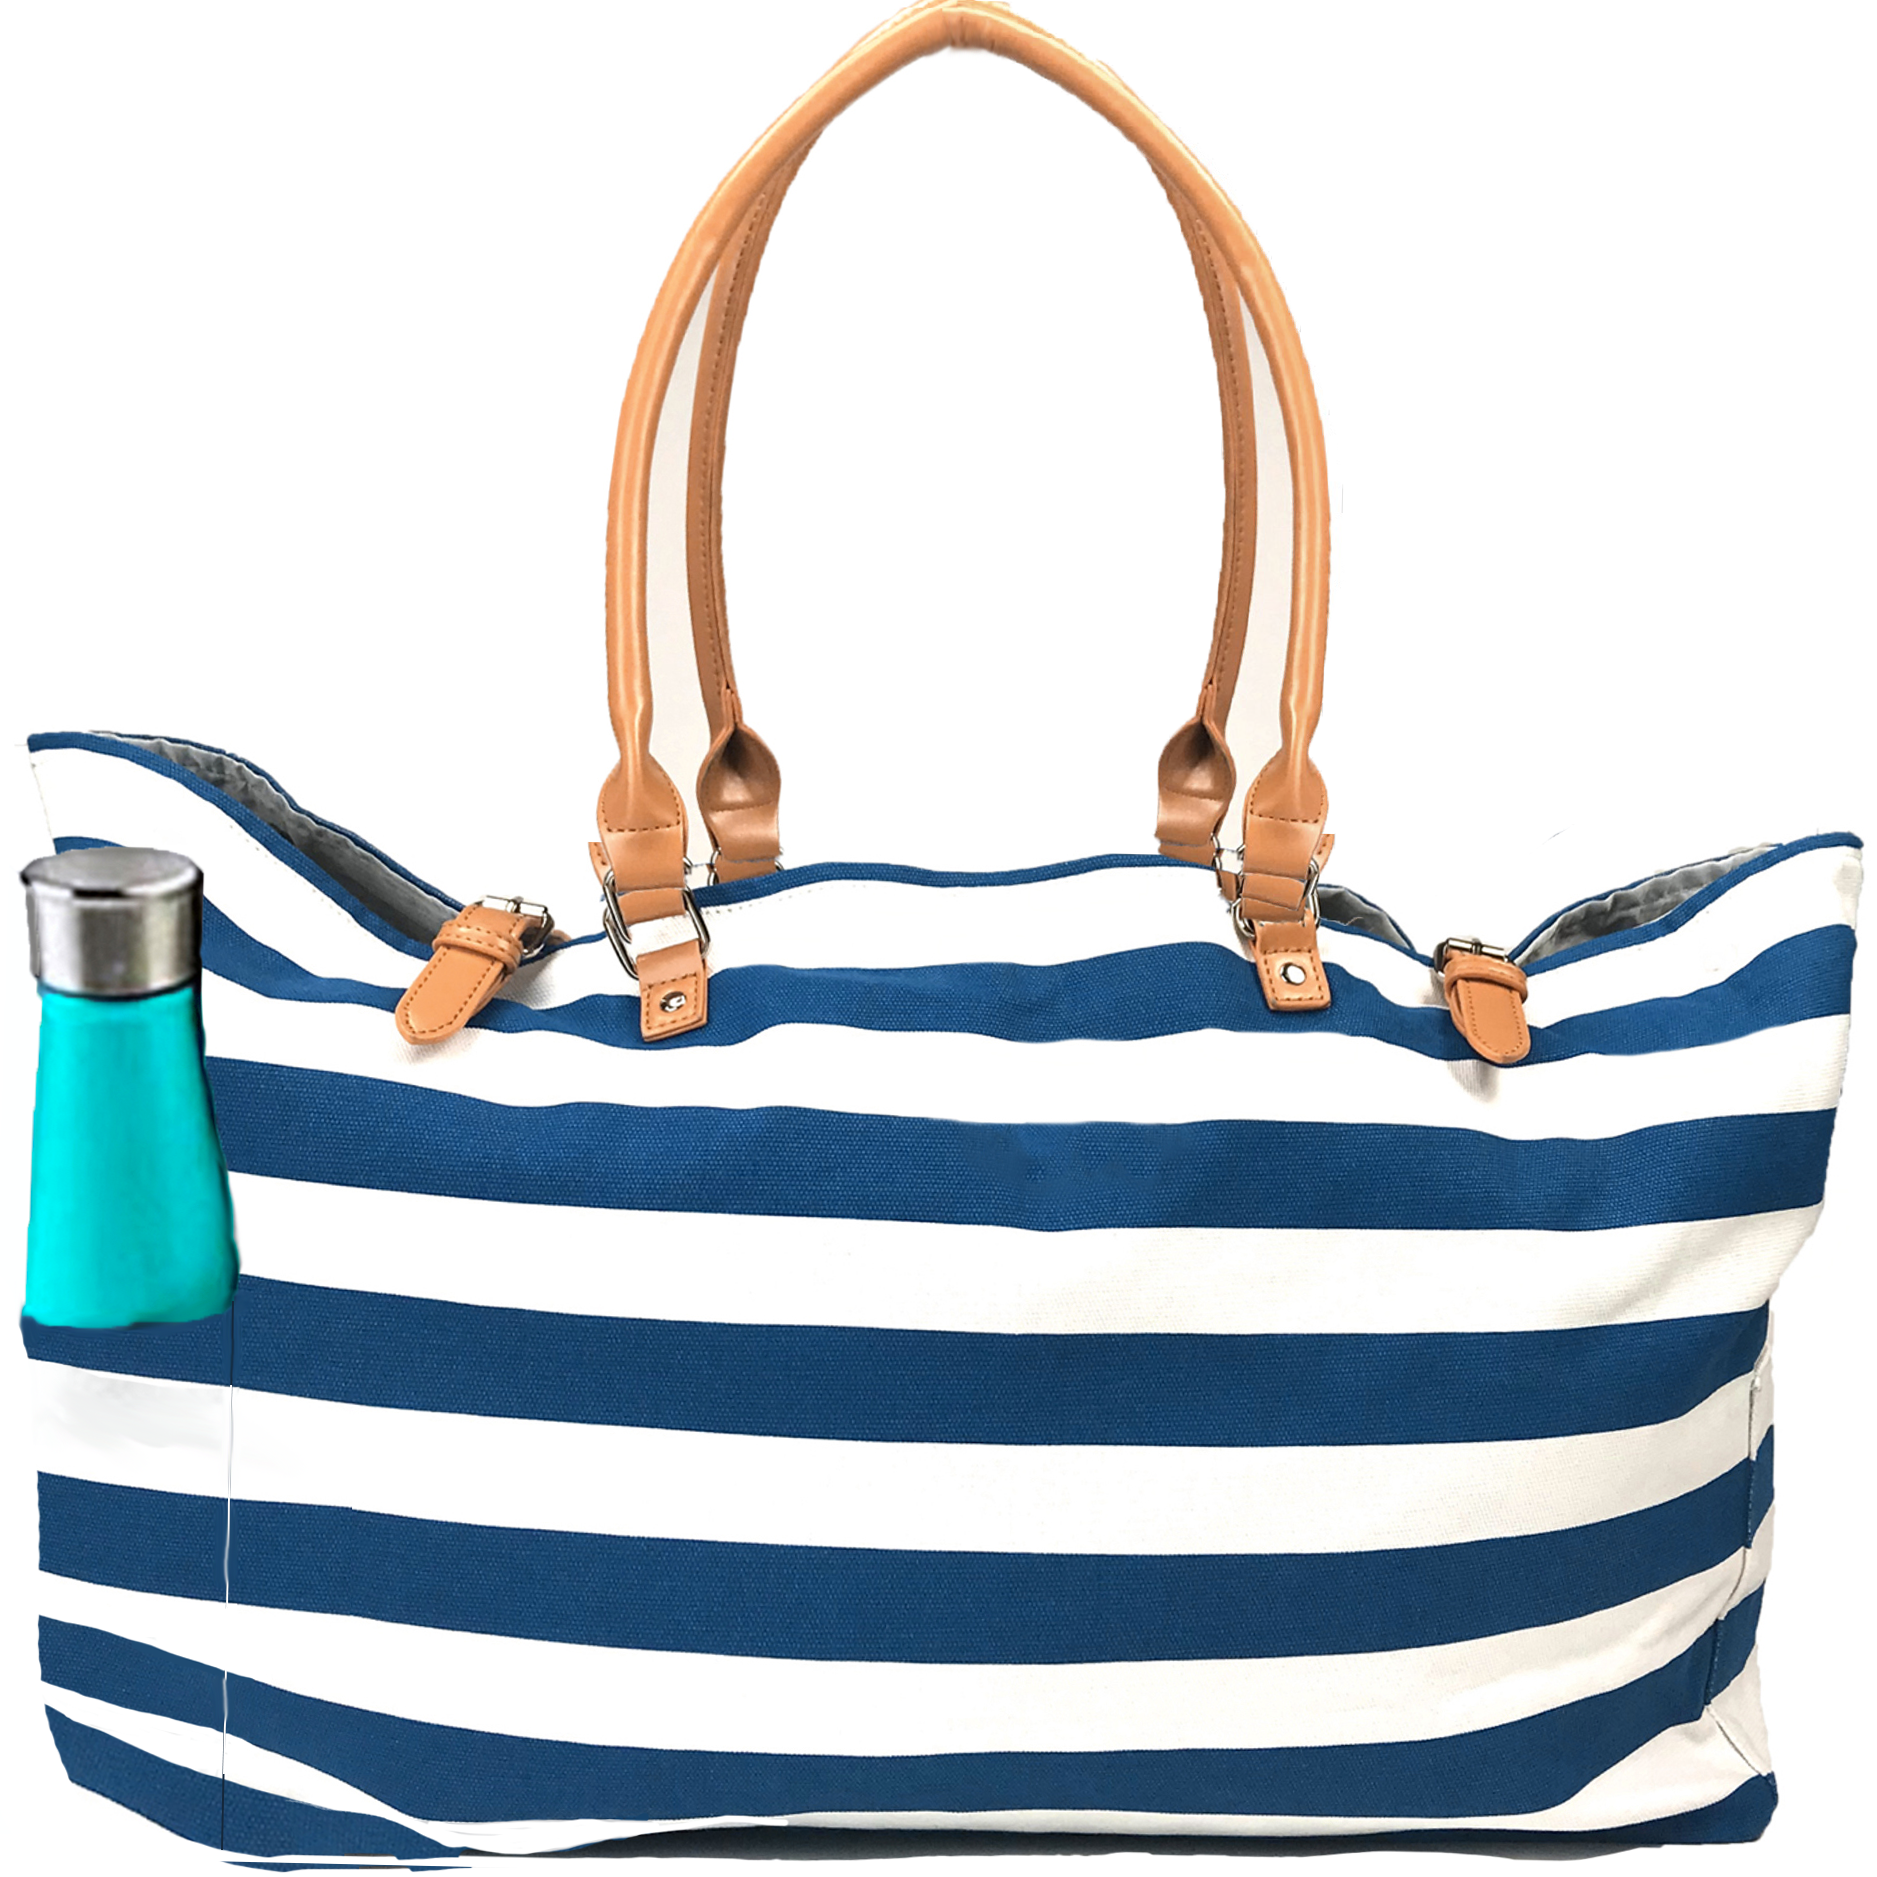 KEHO Large Canvas Shoulder Beach Bag - (Navy Blue) – Keho Bags